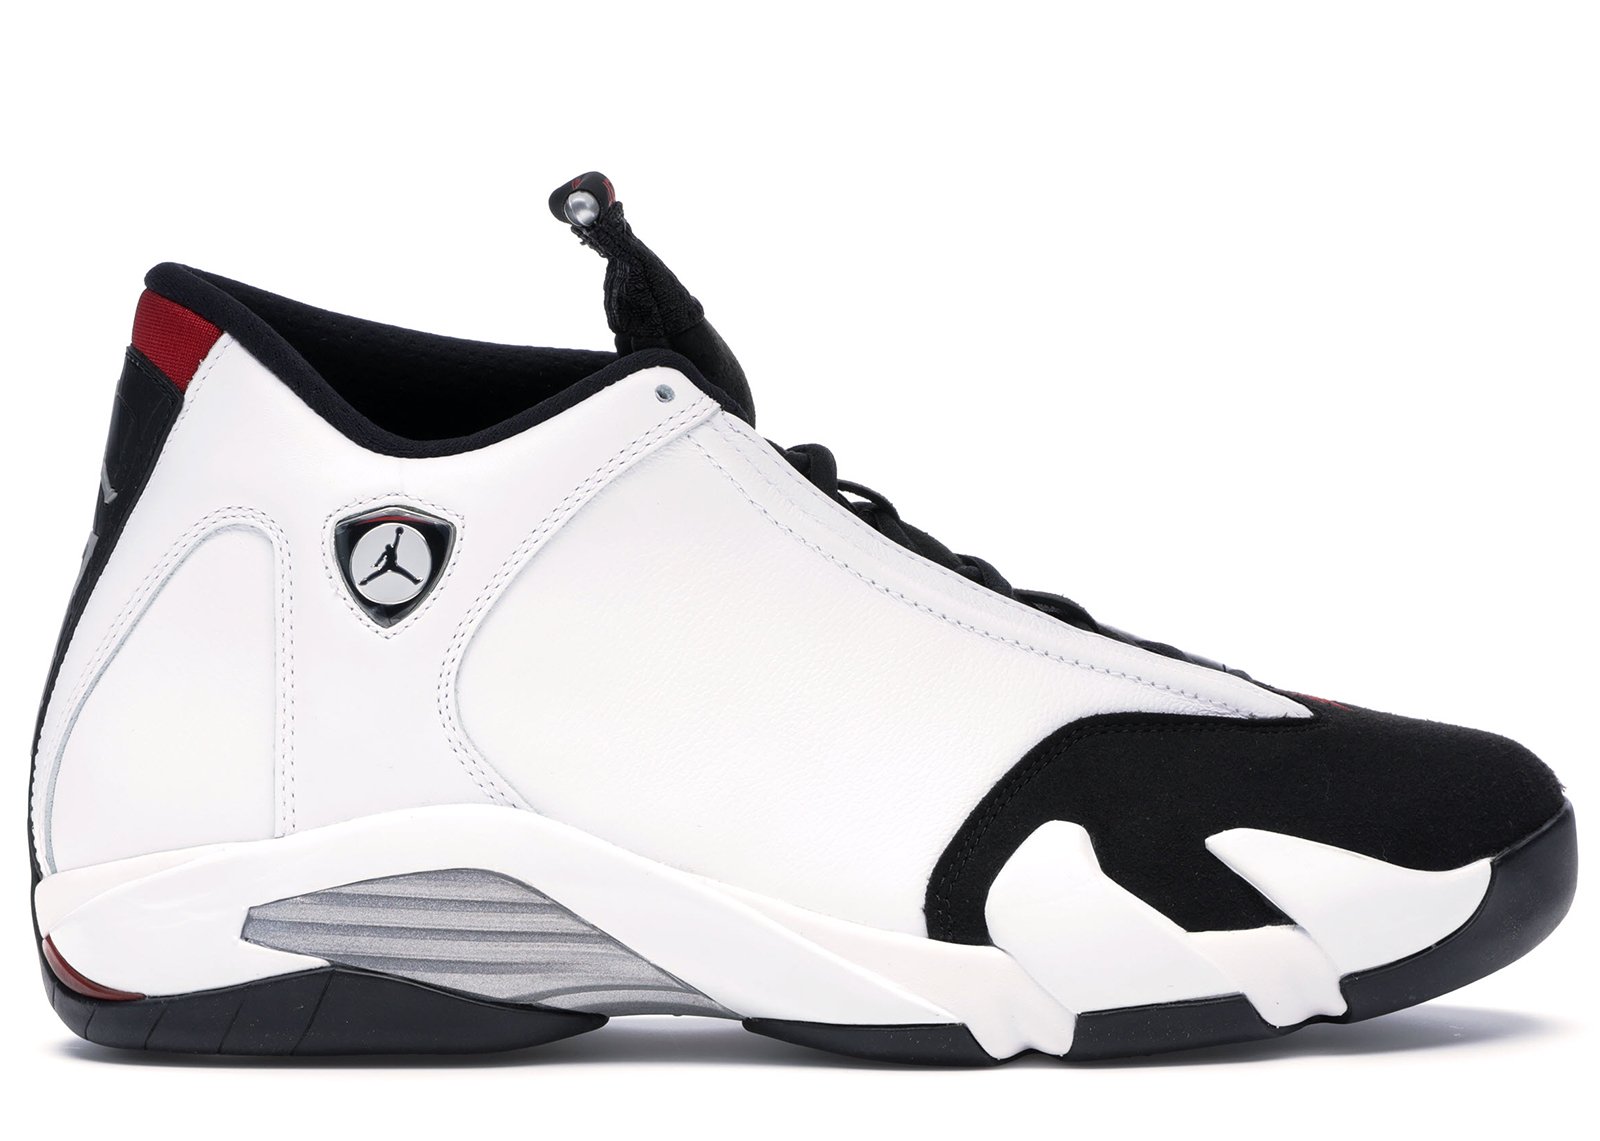 Jordan 14 Retro Black Toe (2014) sneakers